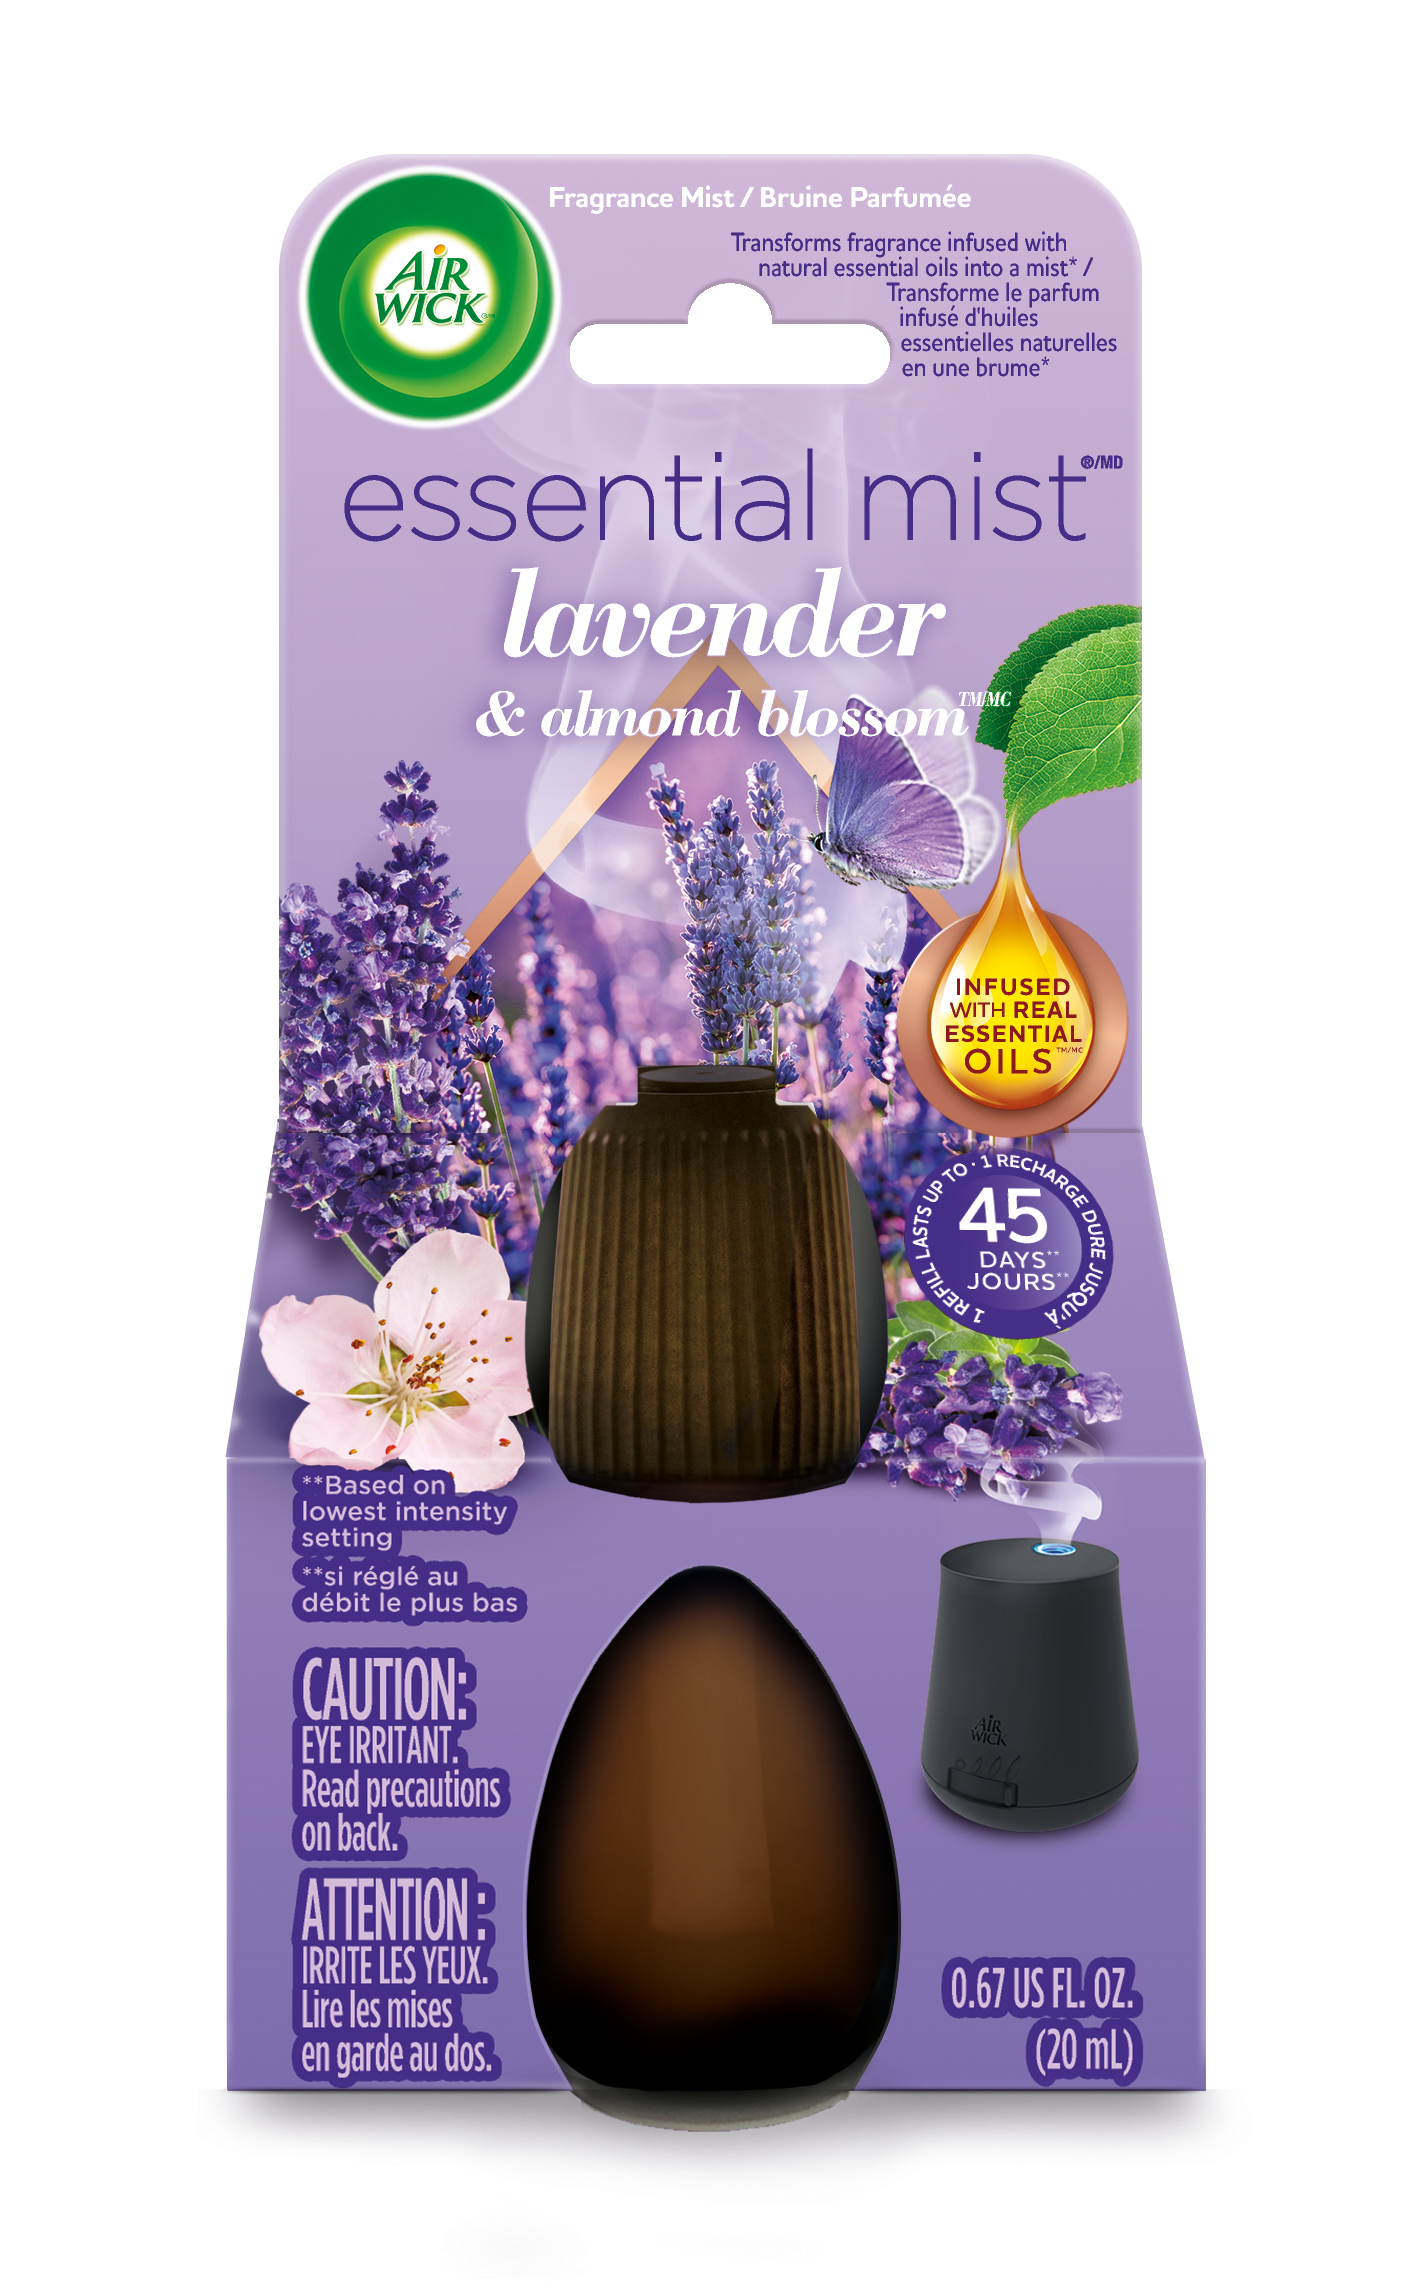 AIR WICK® Essential Mist - Lavender & Almond Blossom